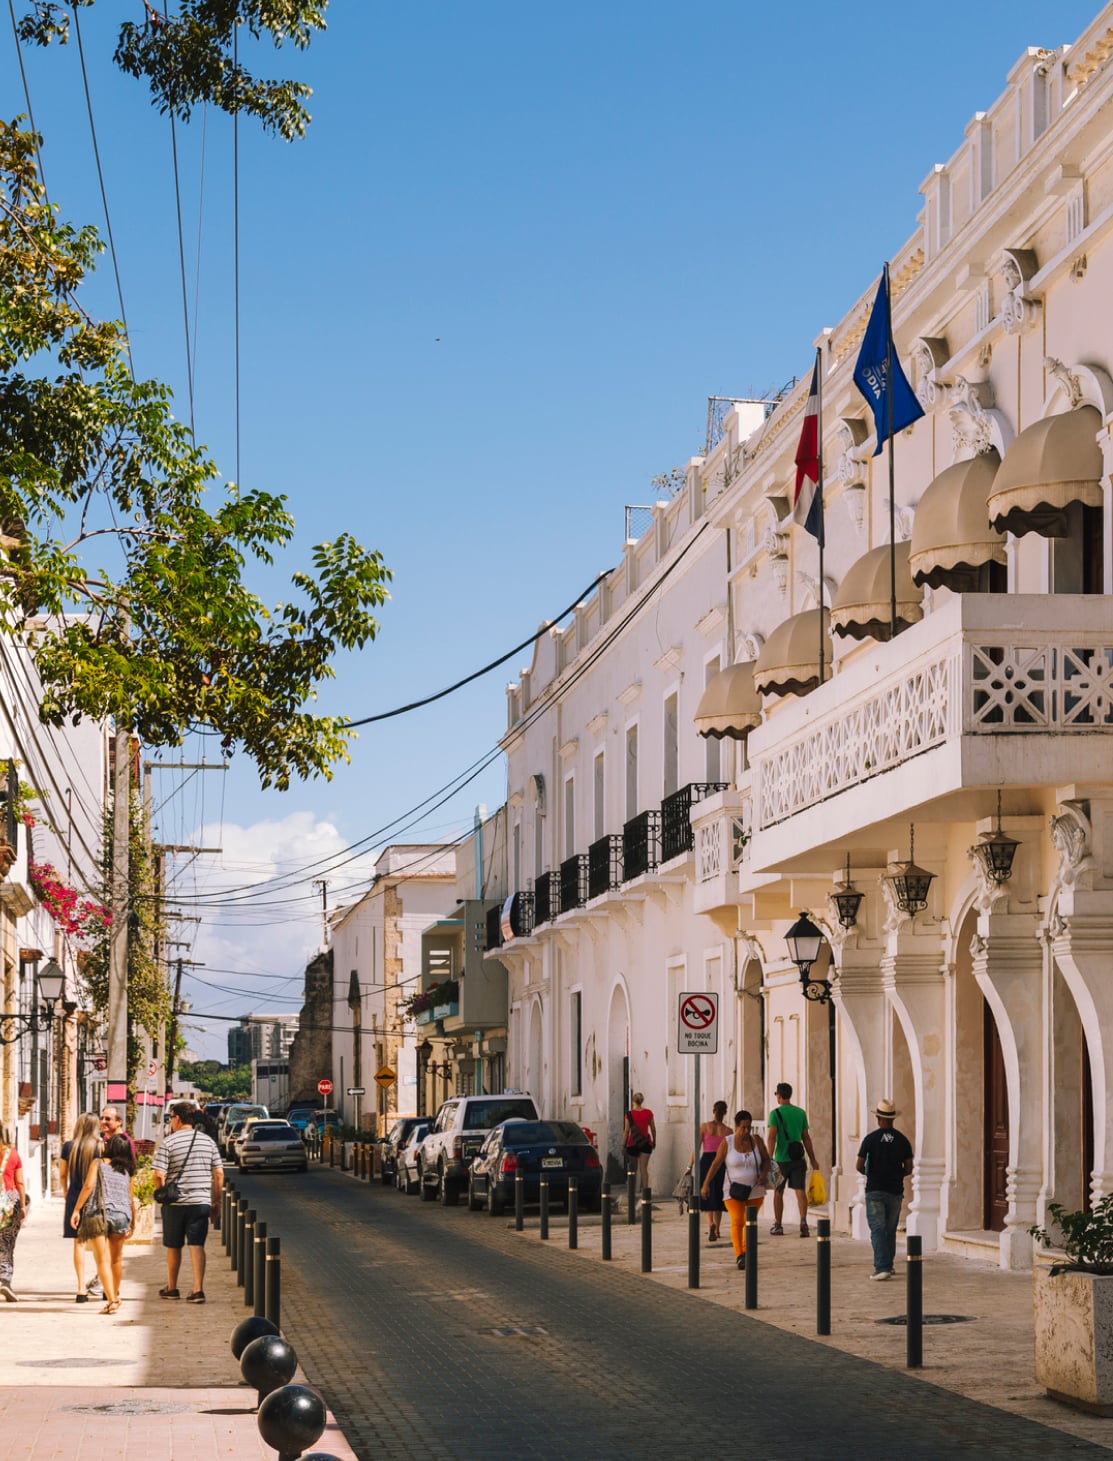 Beautiful street buildings in Dominican Republic